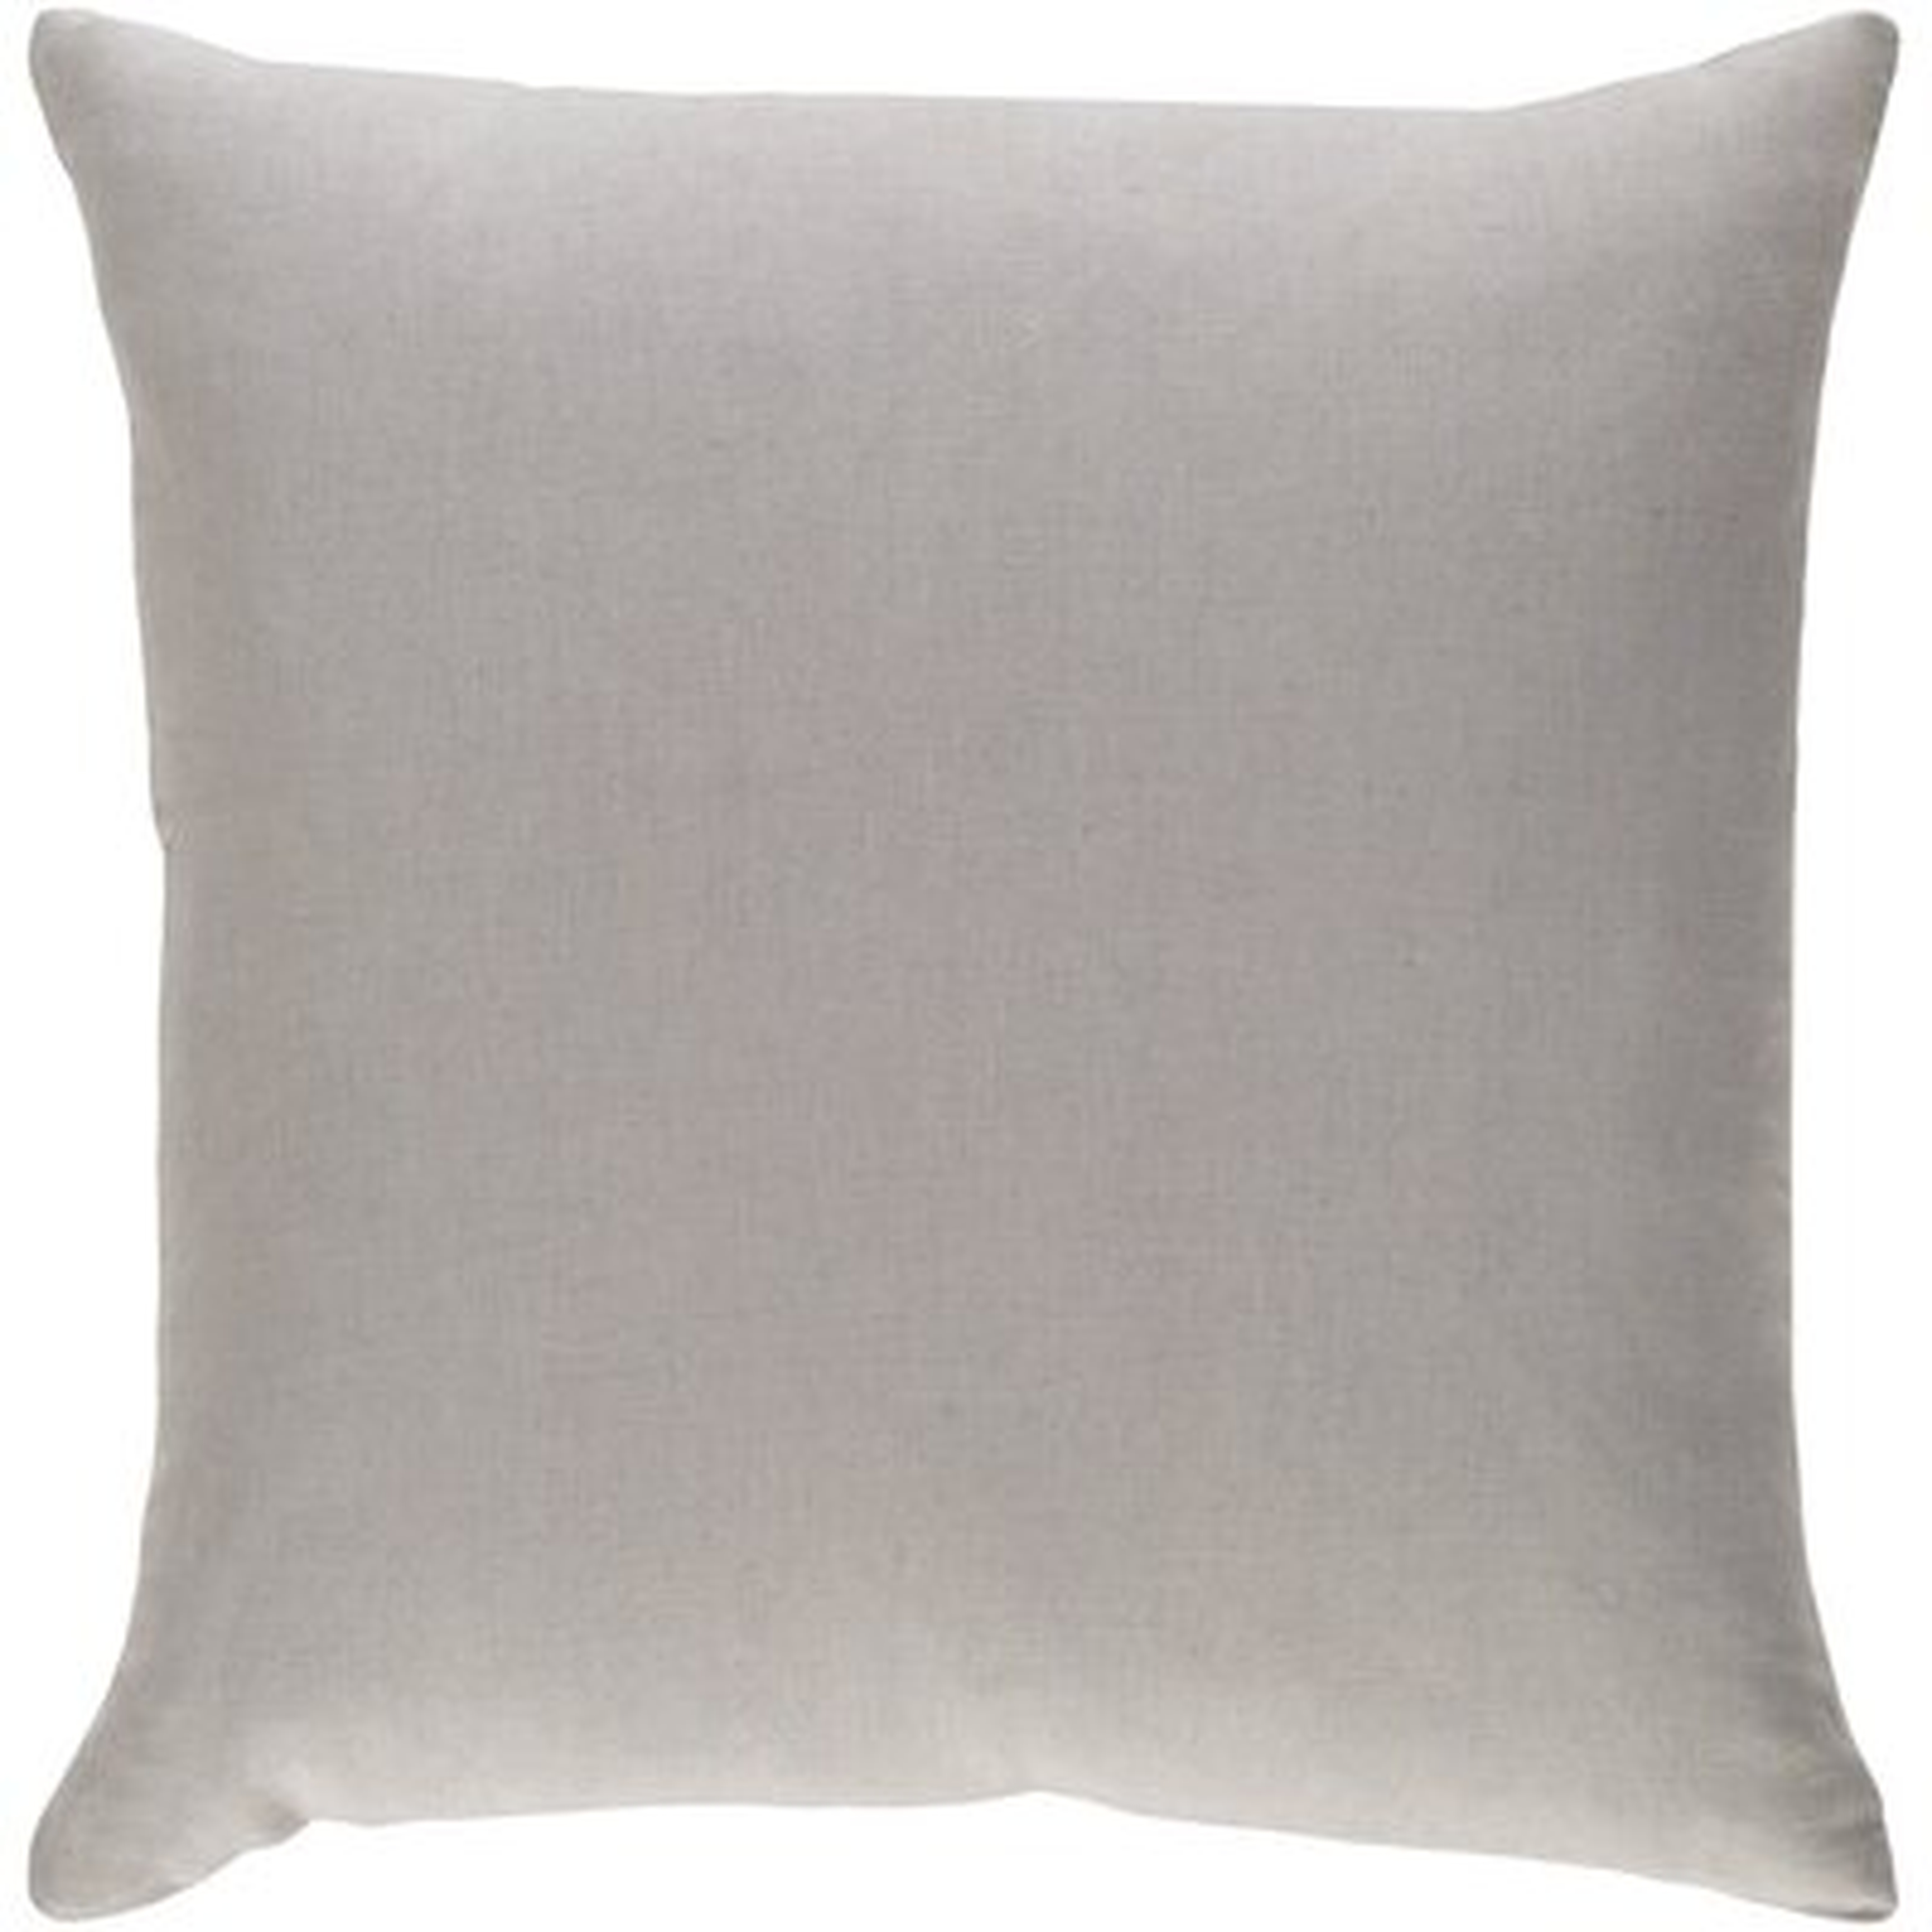 Troxel Linen Throw Pillow Cover - Birch Lane